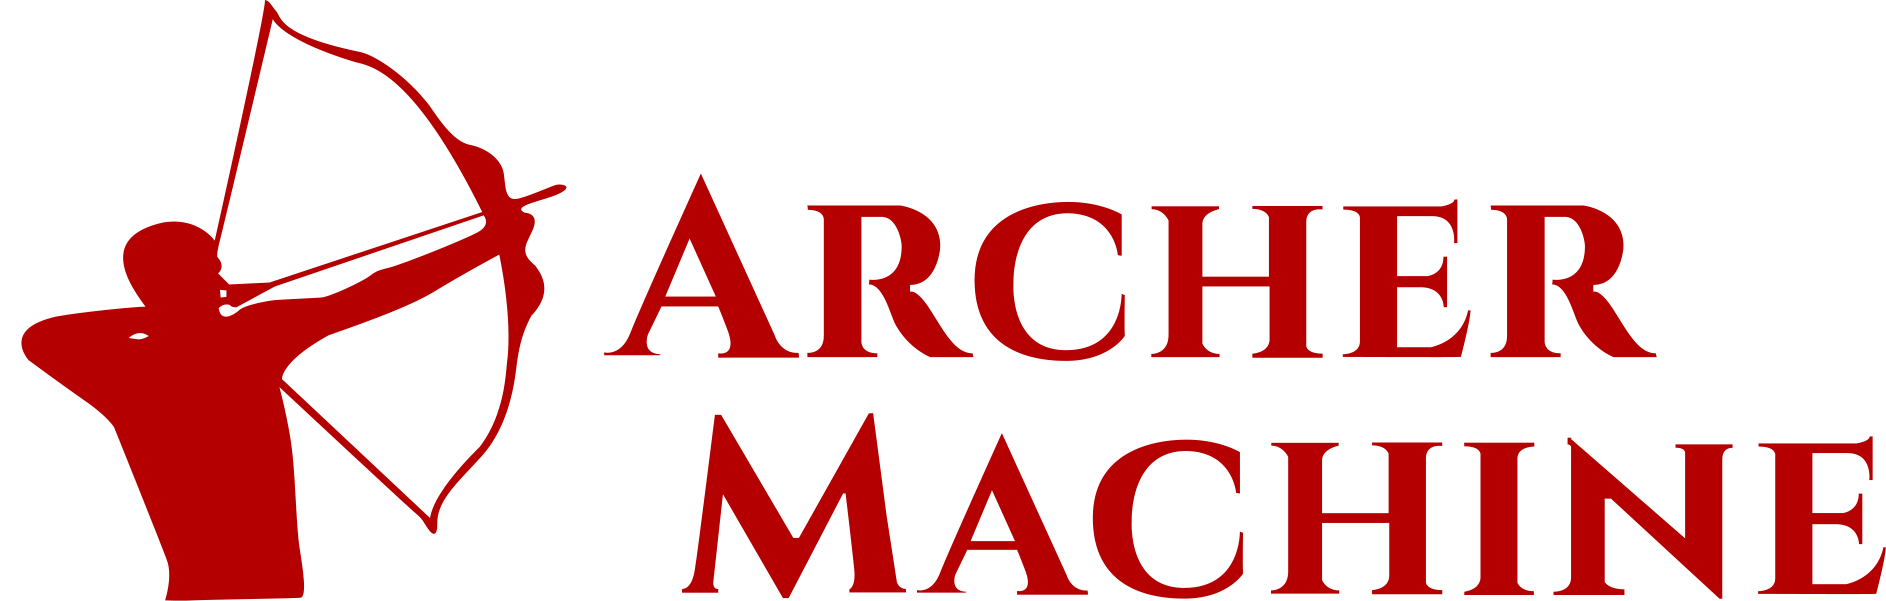 Red Archer Logo - CNC Machining Services | Precision Machine Shop in USA